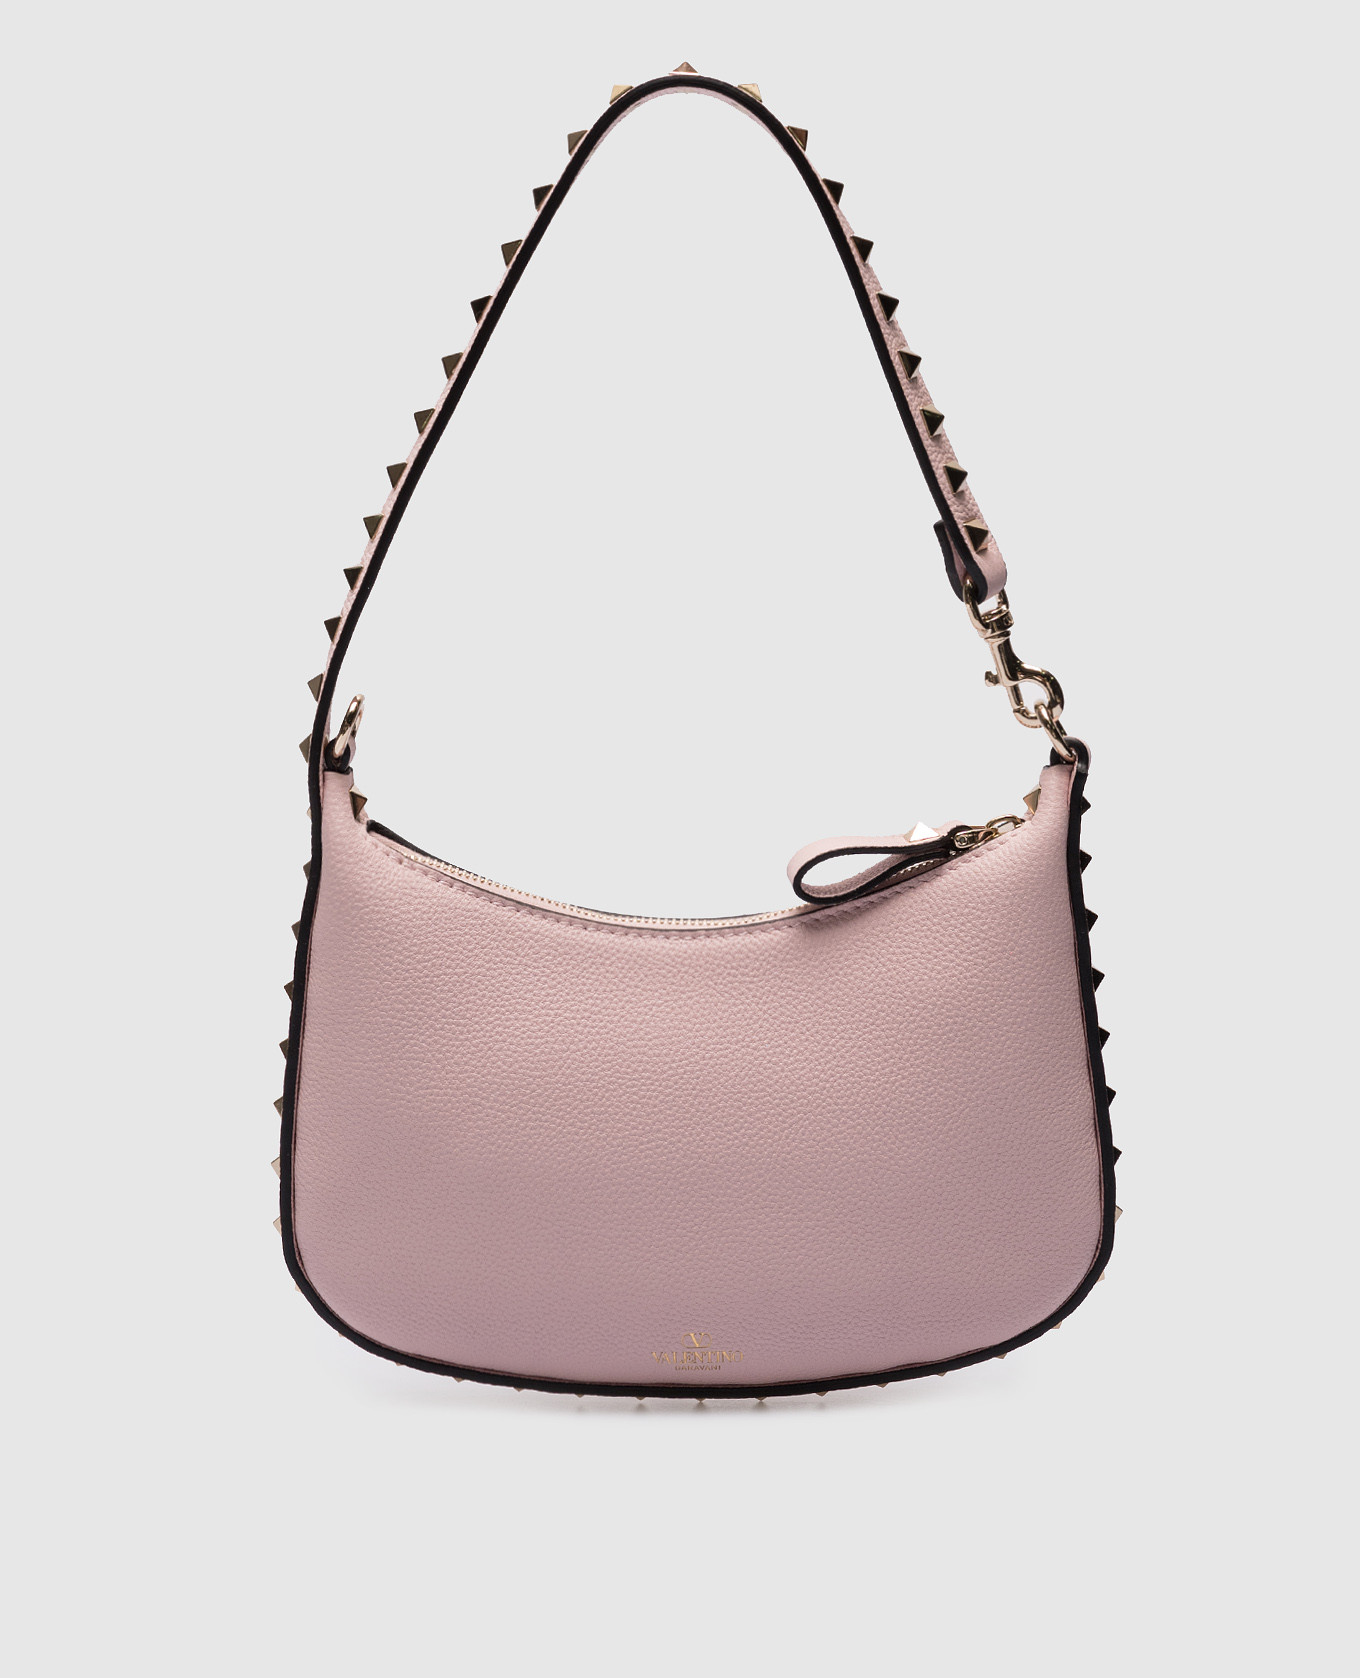 Mini Rockstud pink leather hobo bag